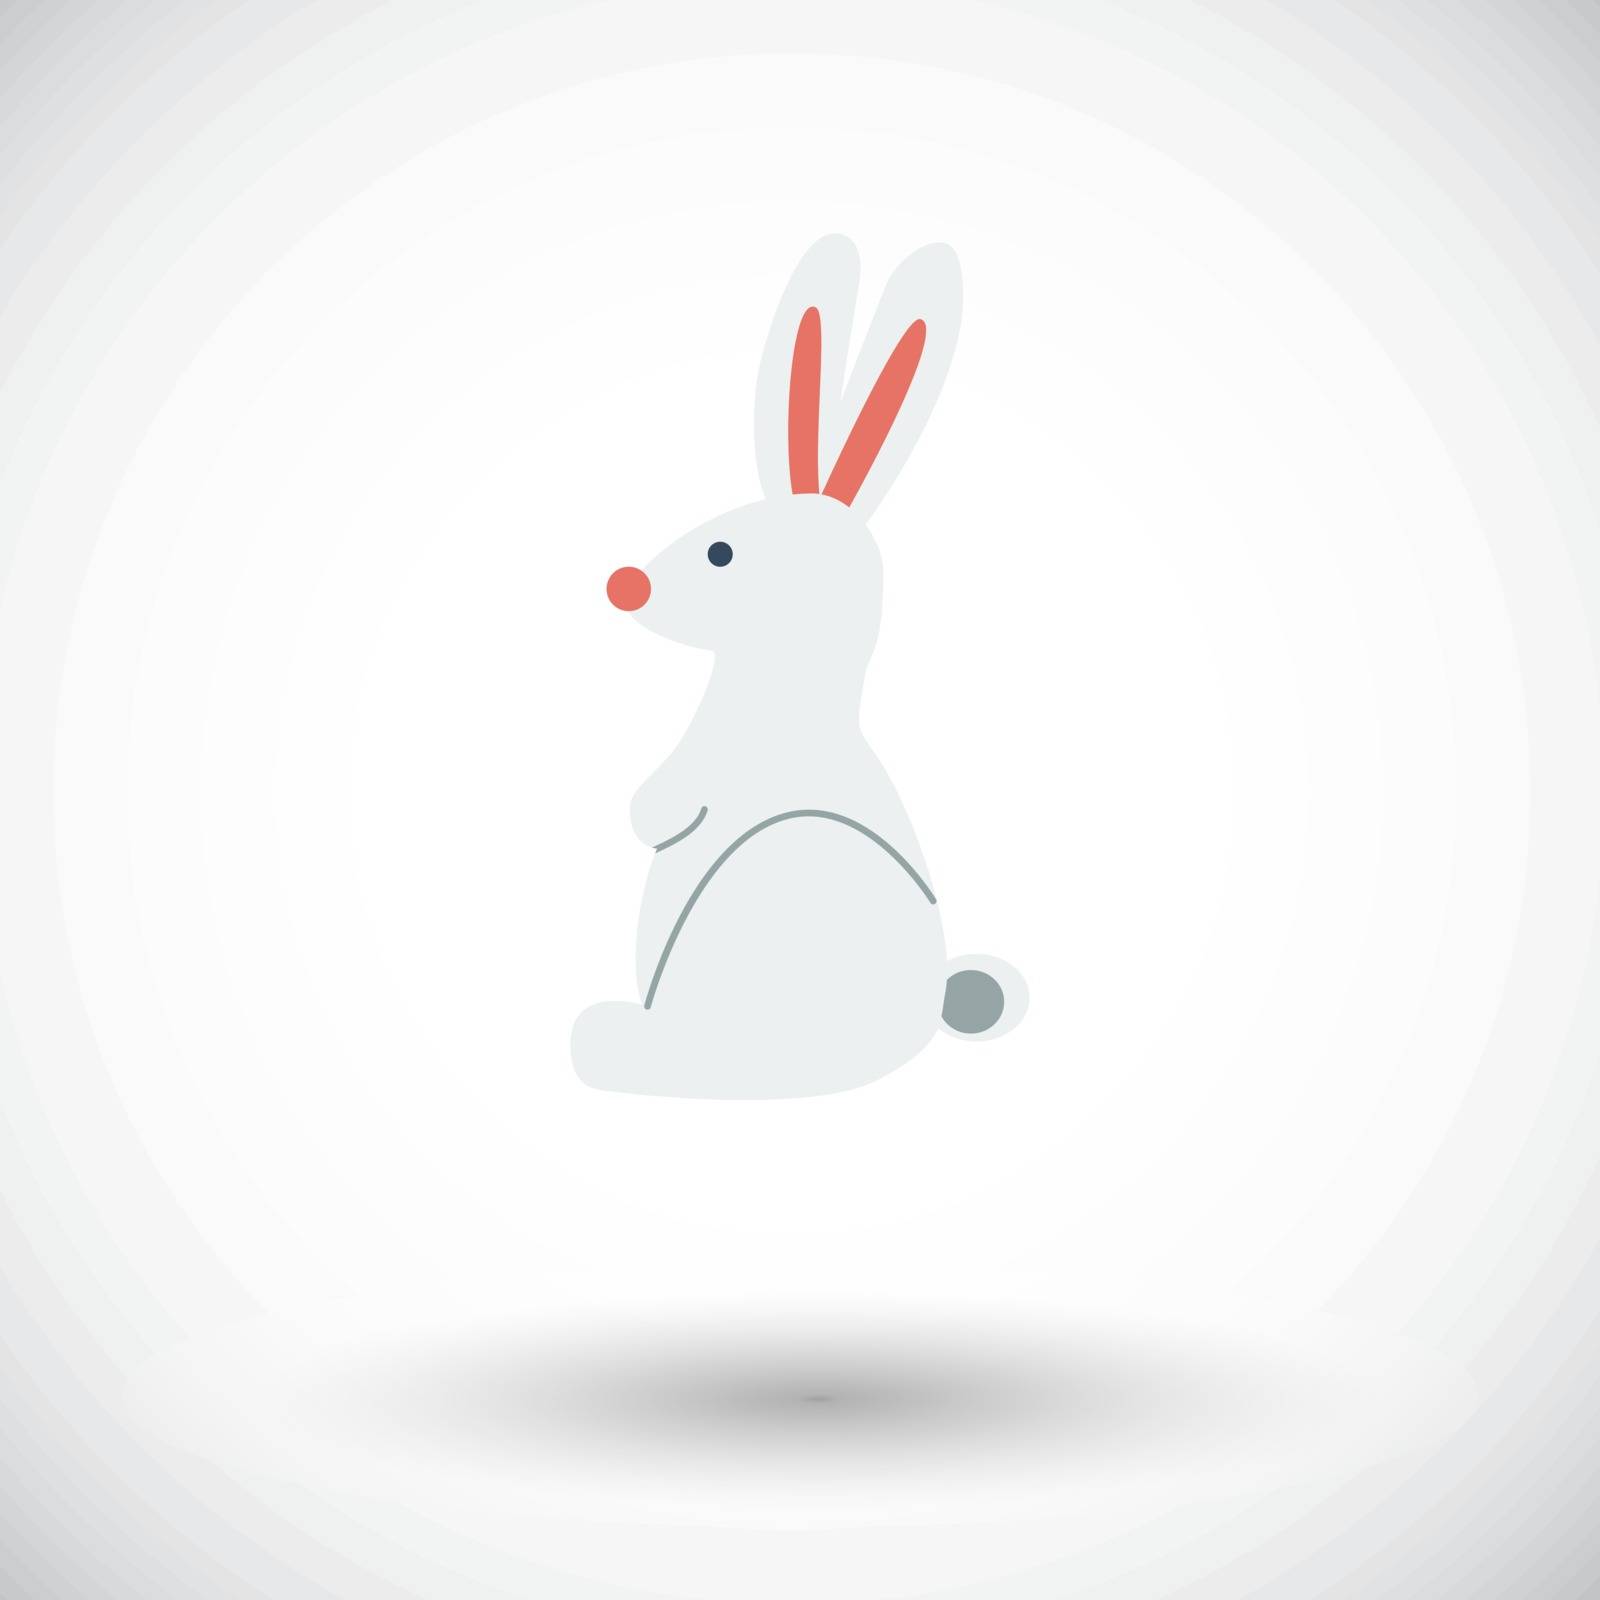 Rabbit. Single flat icon on white background. Vector illustration.